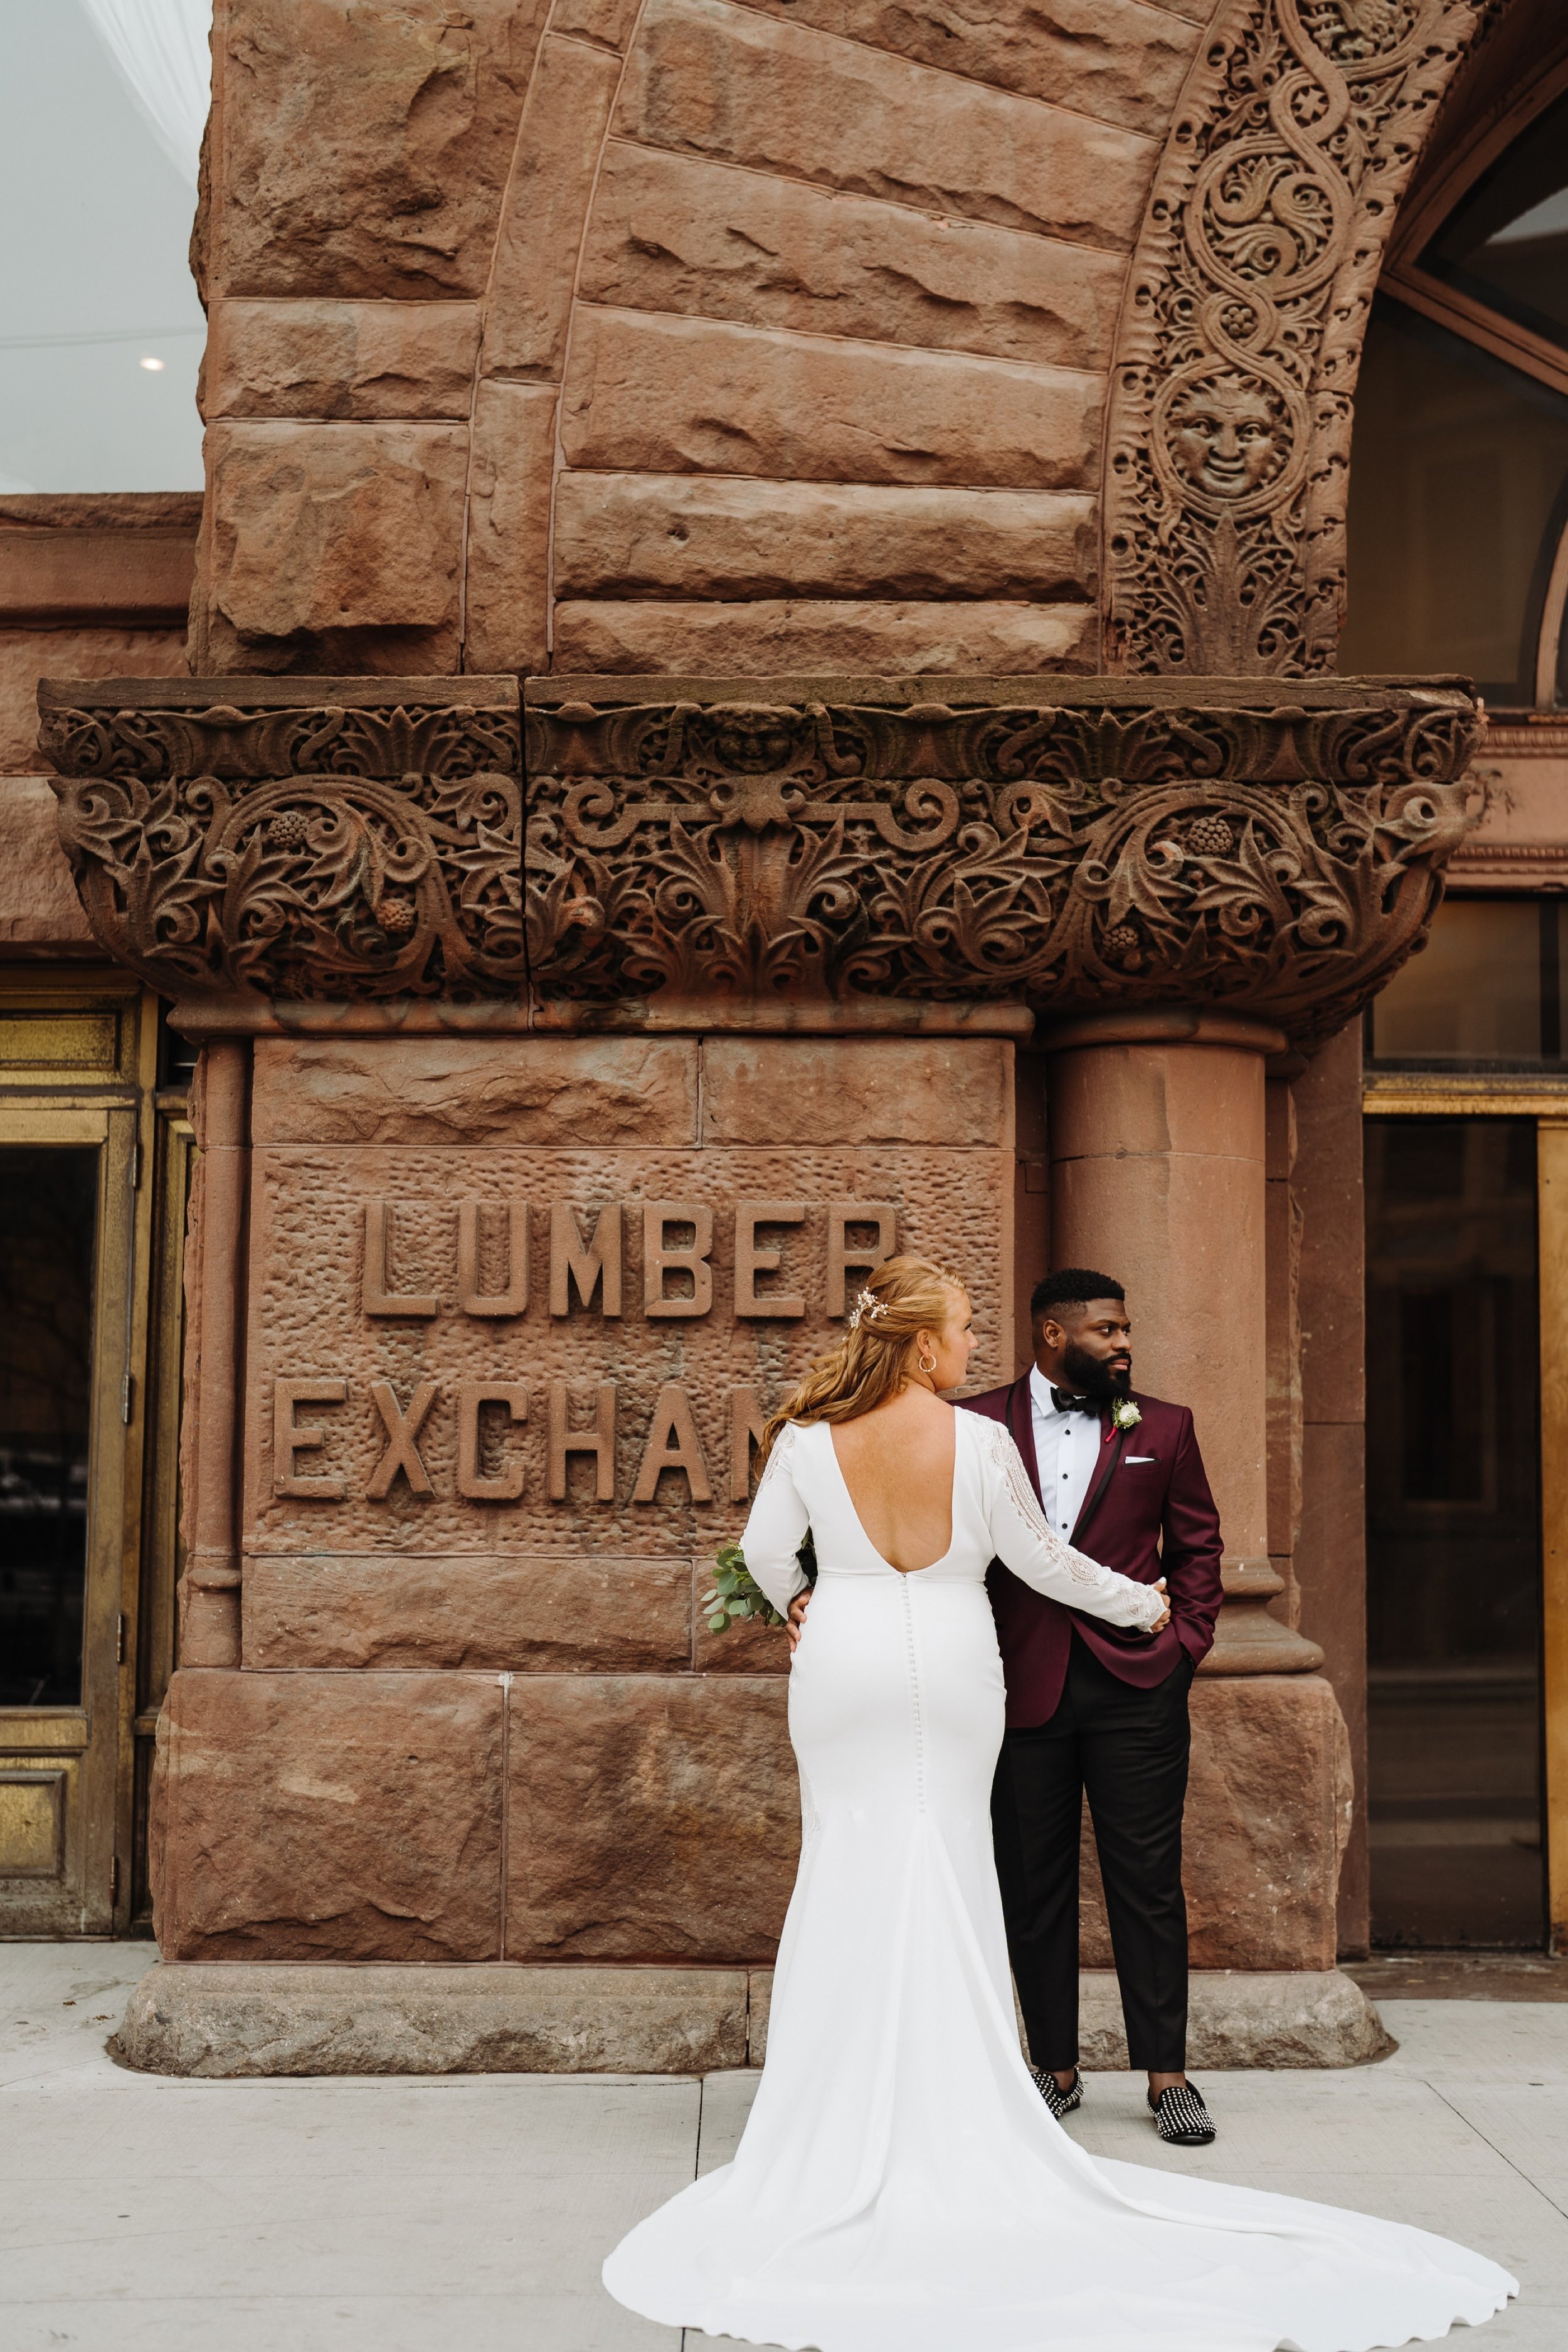 024_Lumbar Exchange wedding in Minneapolis, Minnesota..jpg